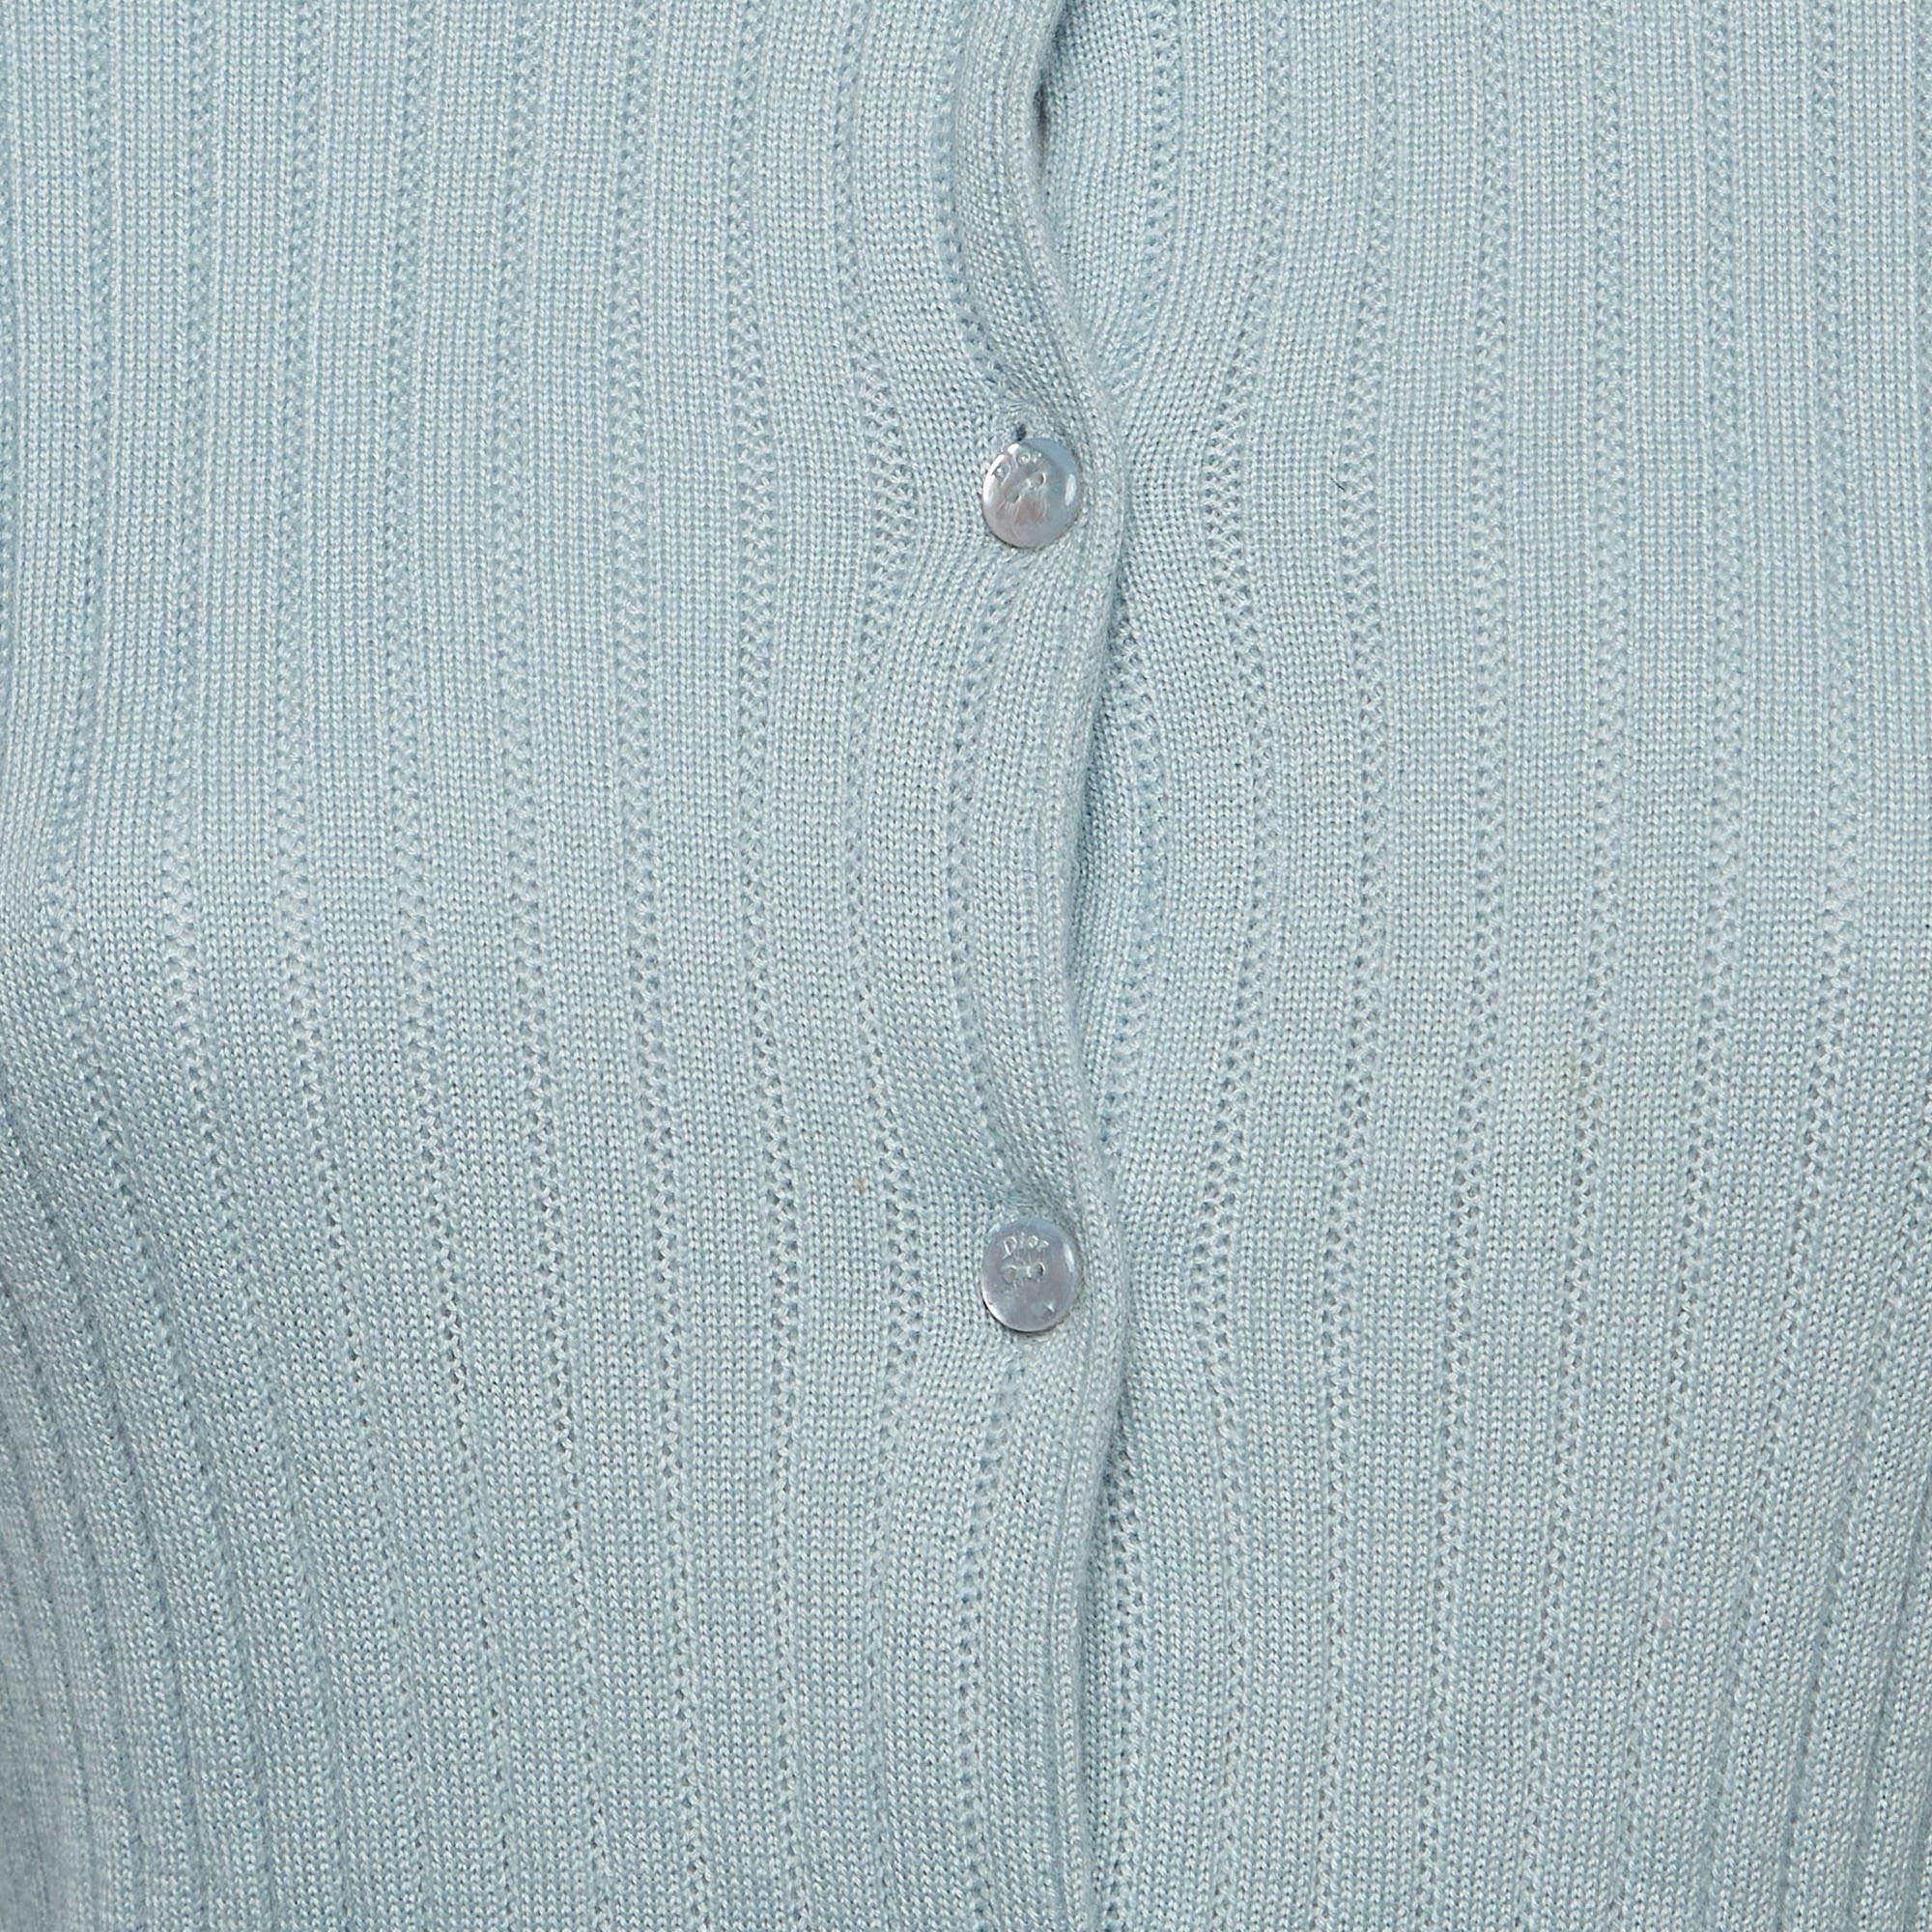 Christian Dior Light Blue Cashmere & Silk Knit Buttoned Sweater S In Good Condition For Sale In Dubai, Al Qouz 2